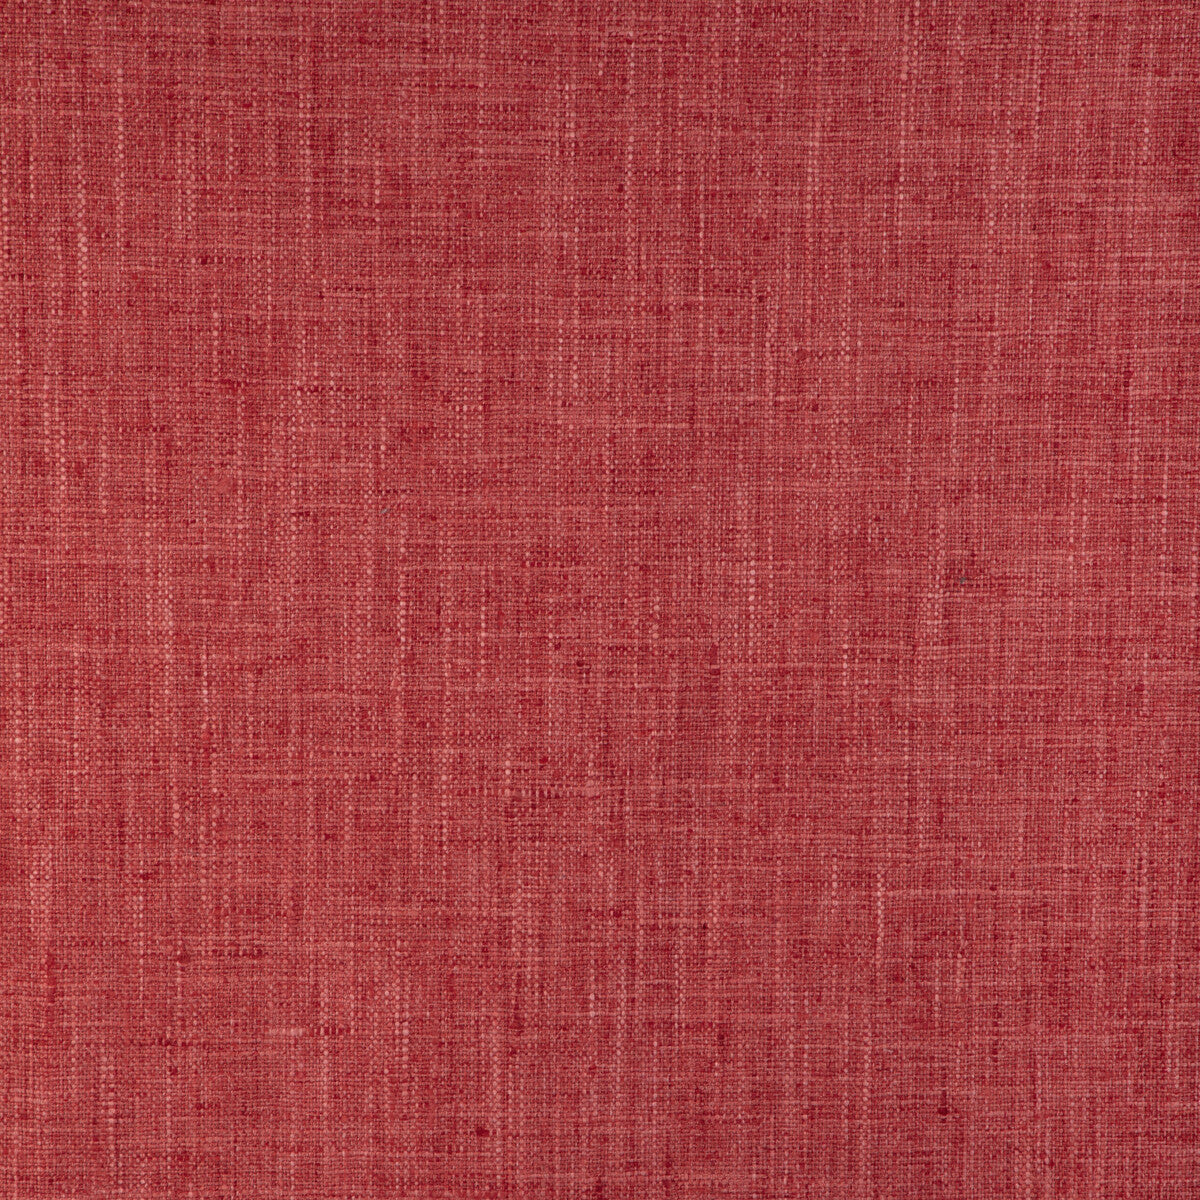 Kravet Smart fabric in 34083-77 color - pattern 34083.77.0 - by Kravet Smart